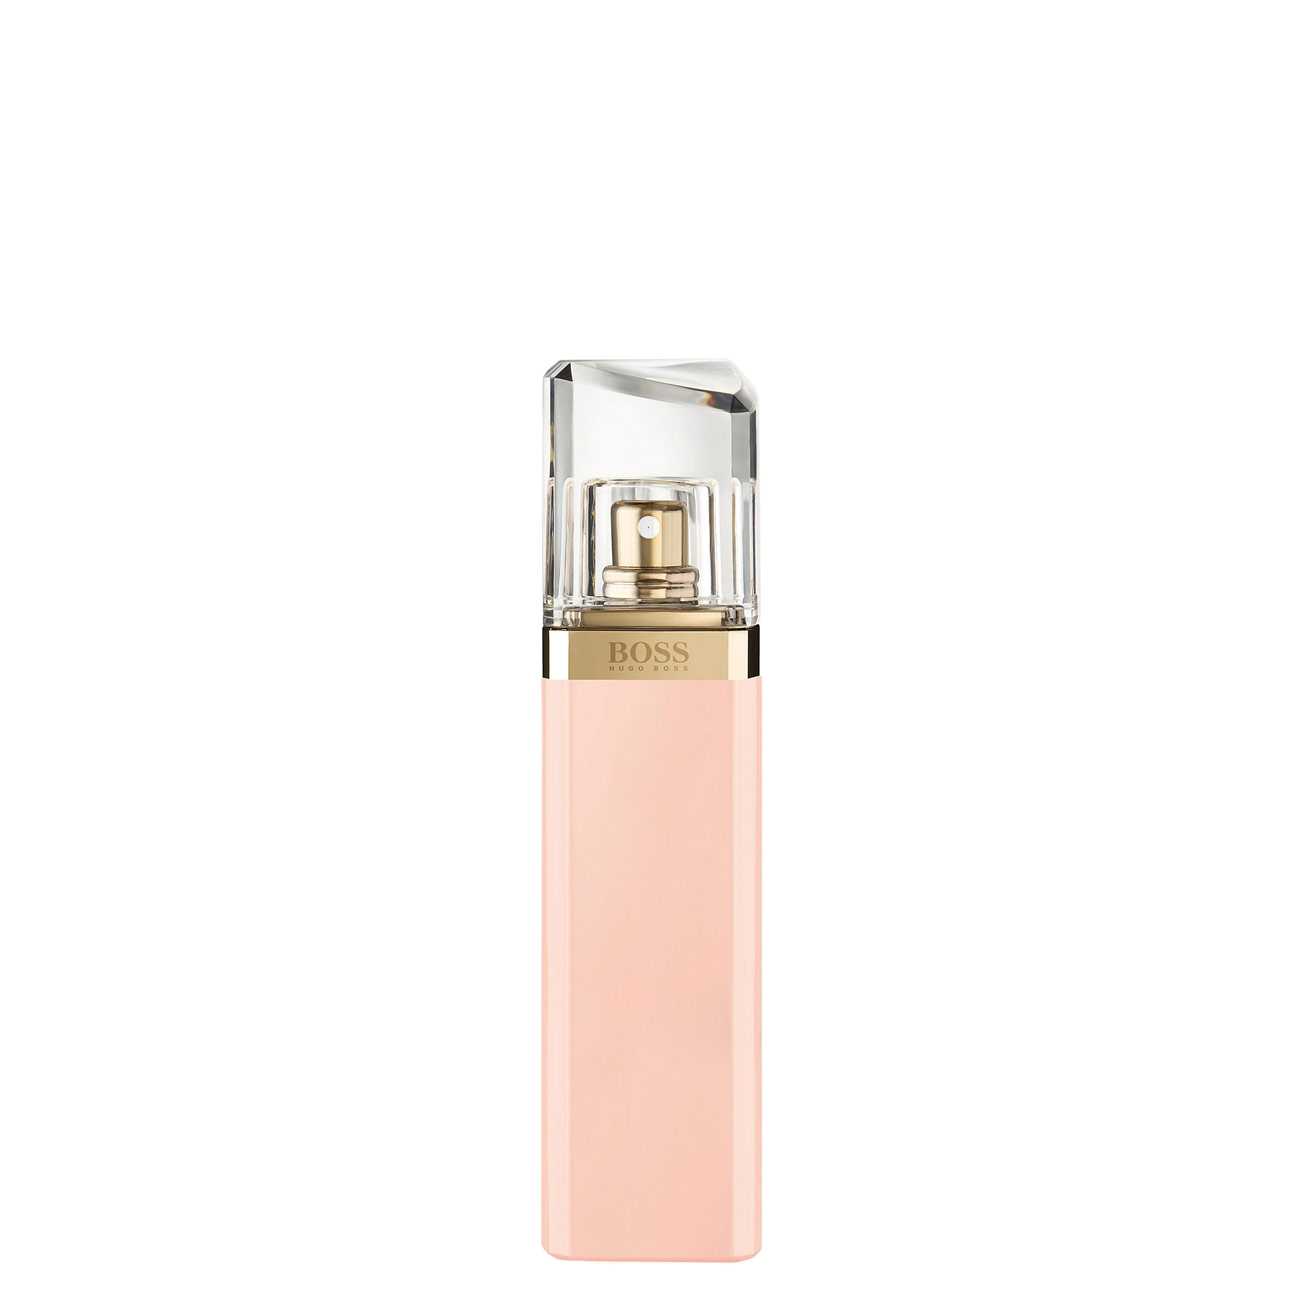 Apa de Parfum Hugo Boss MA VIE INTENSE 50 ML 50ml cu comanda online